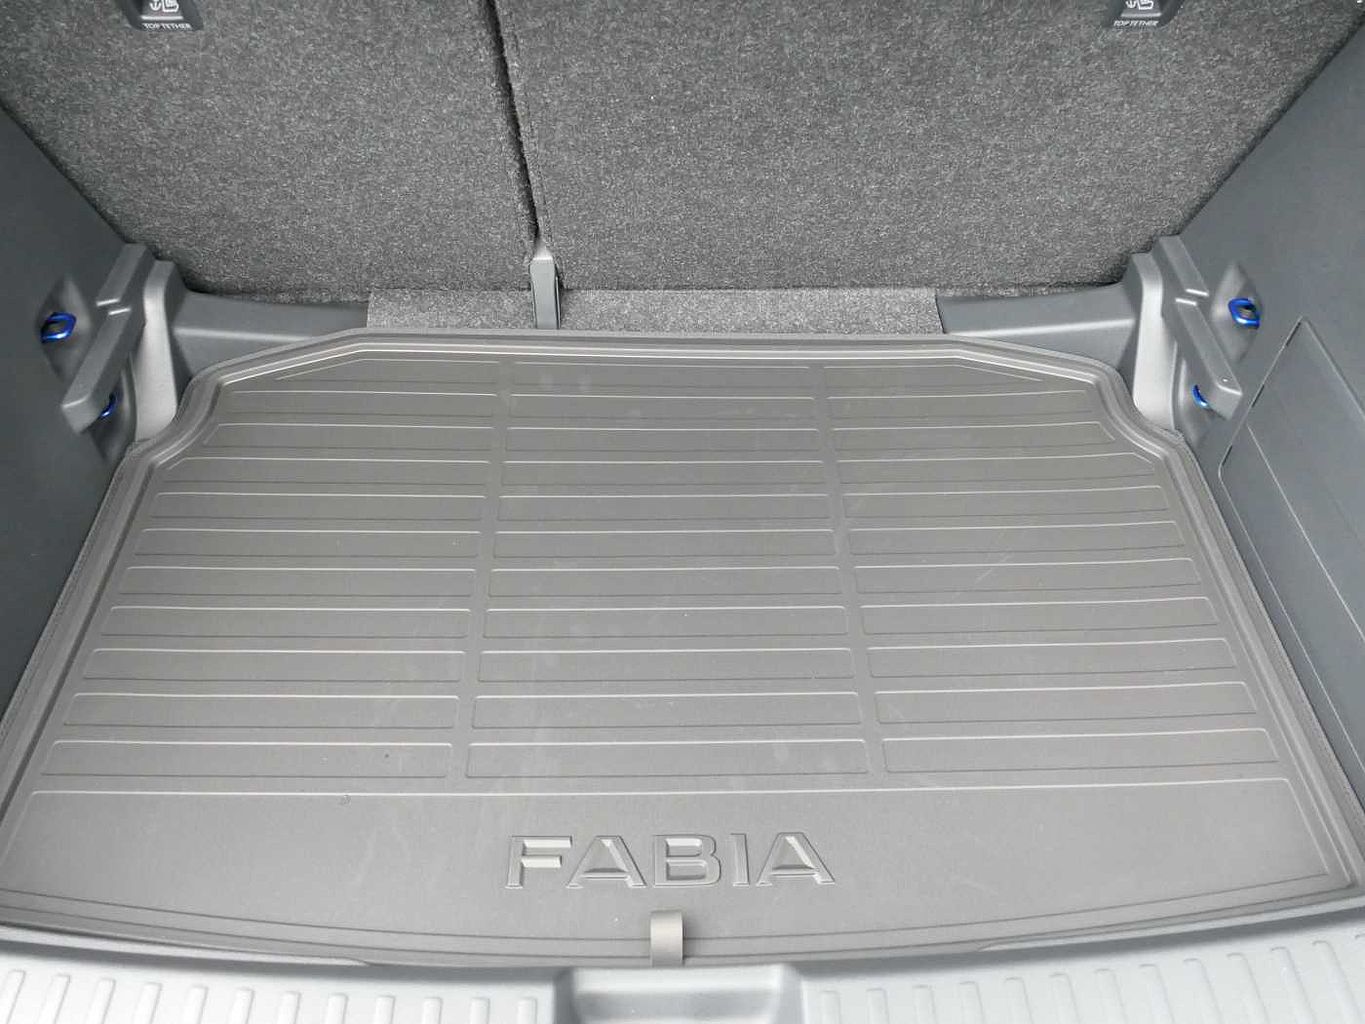 SKODA Fabia 1.0 MPI (80ps) Colour Edition Hatchback